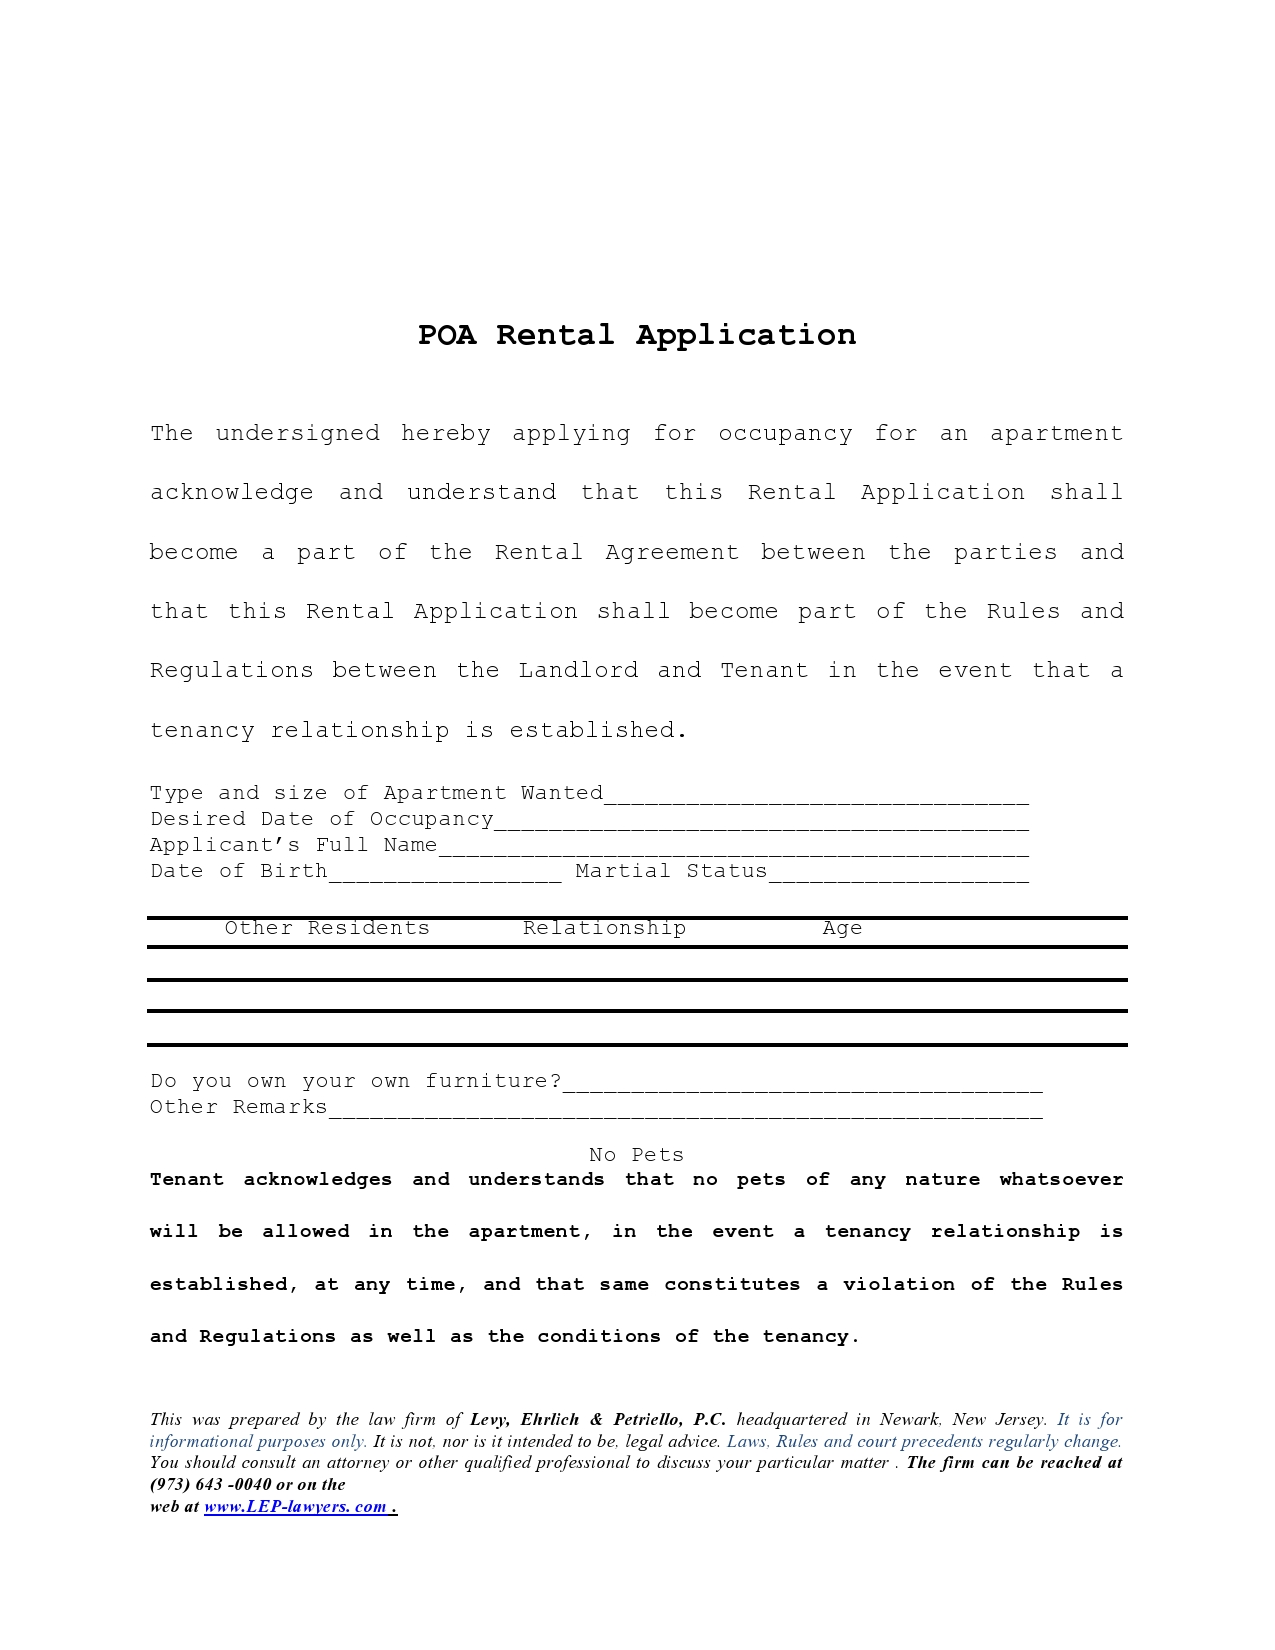 Free rental application form 34